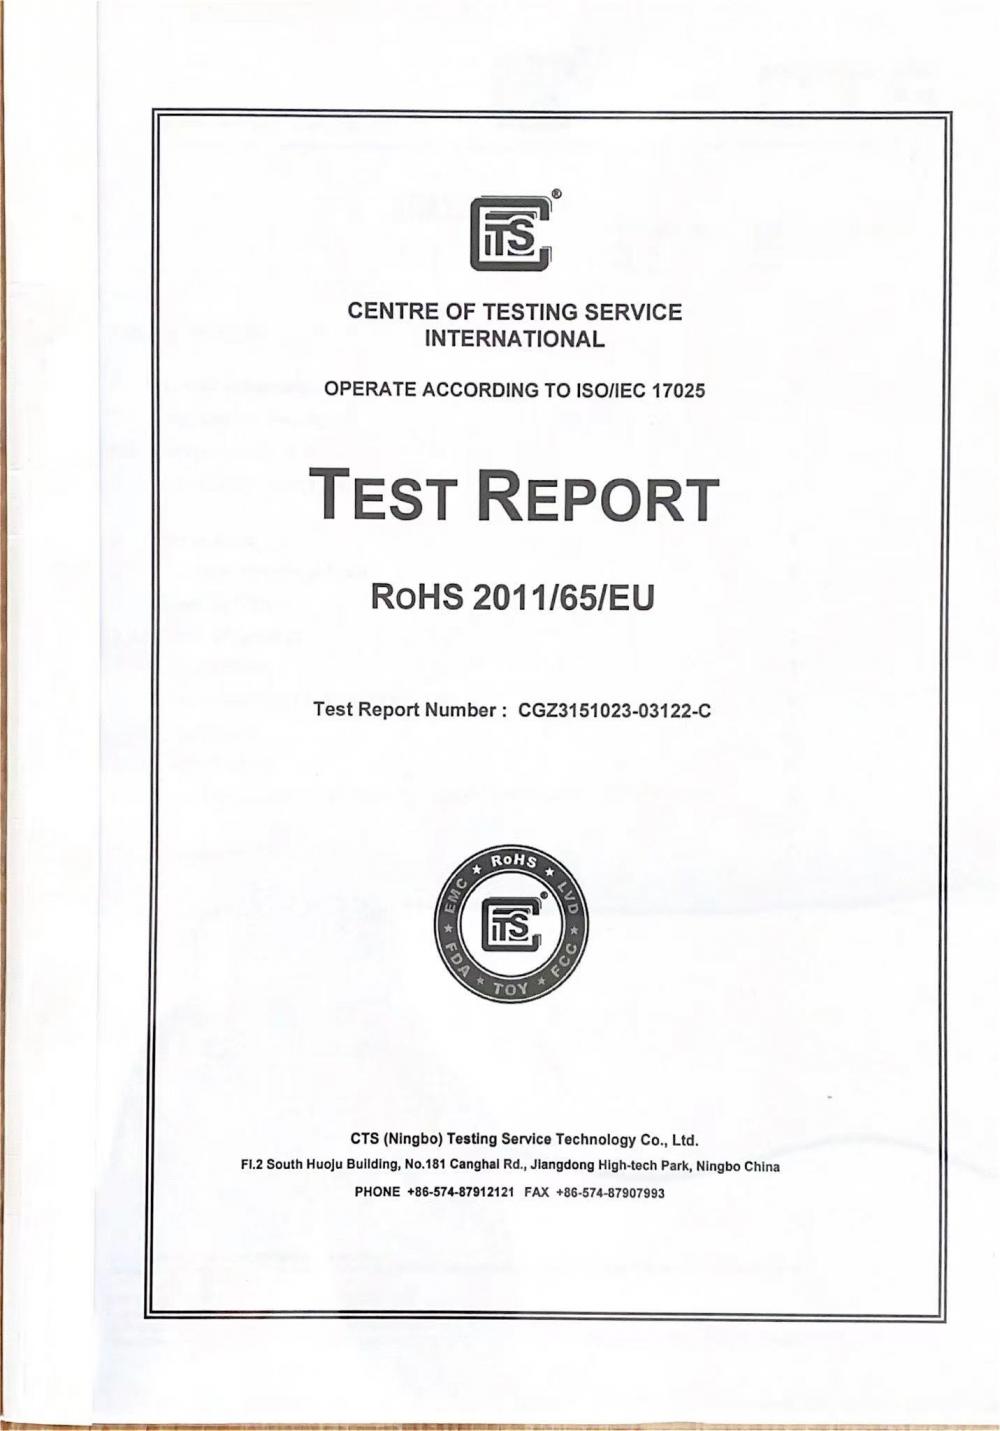 Test Report